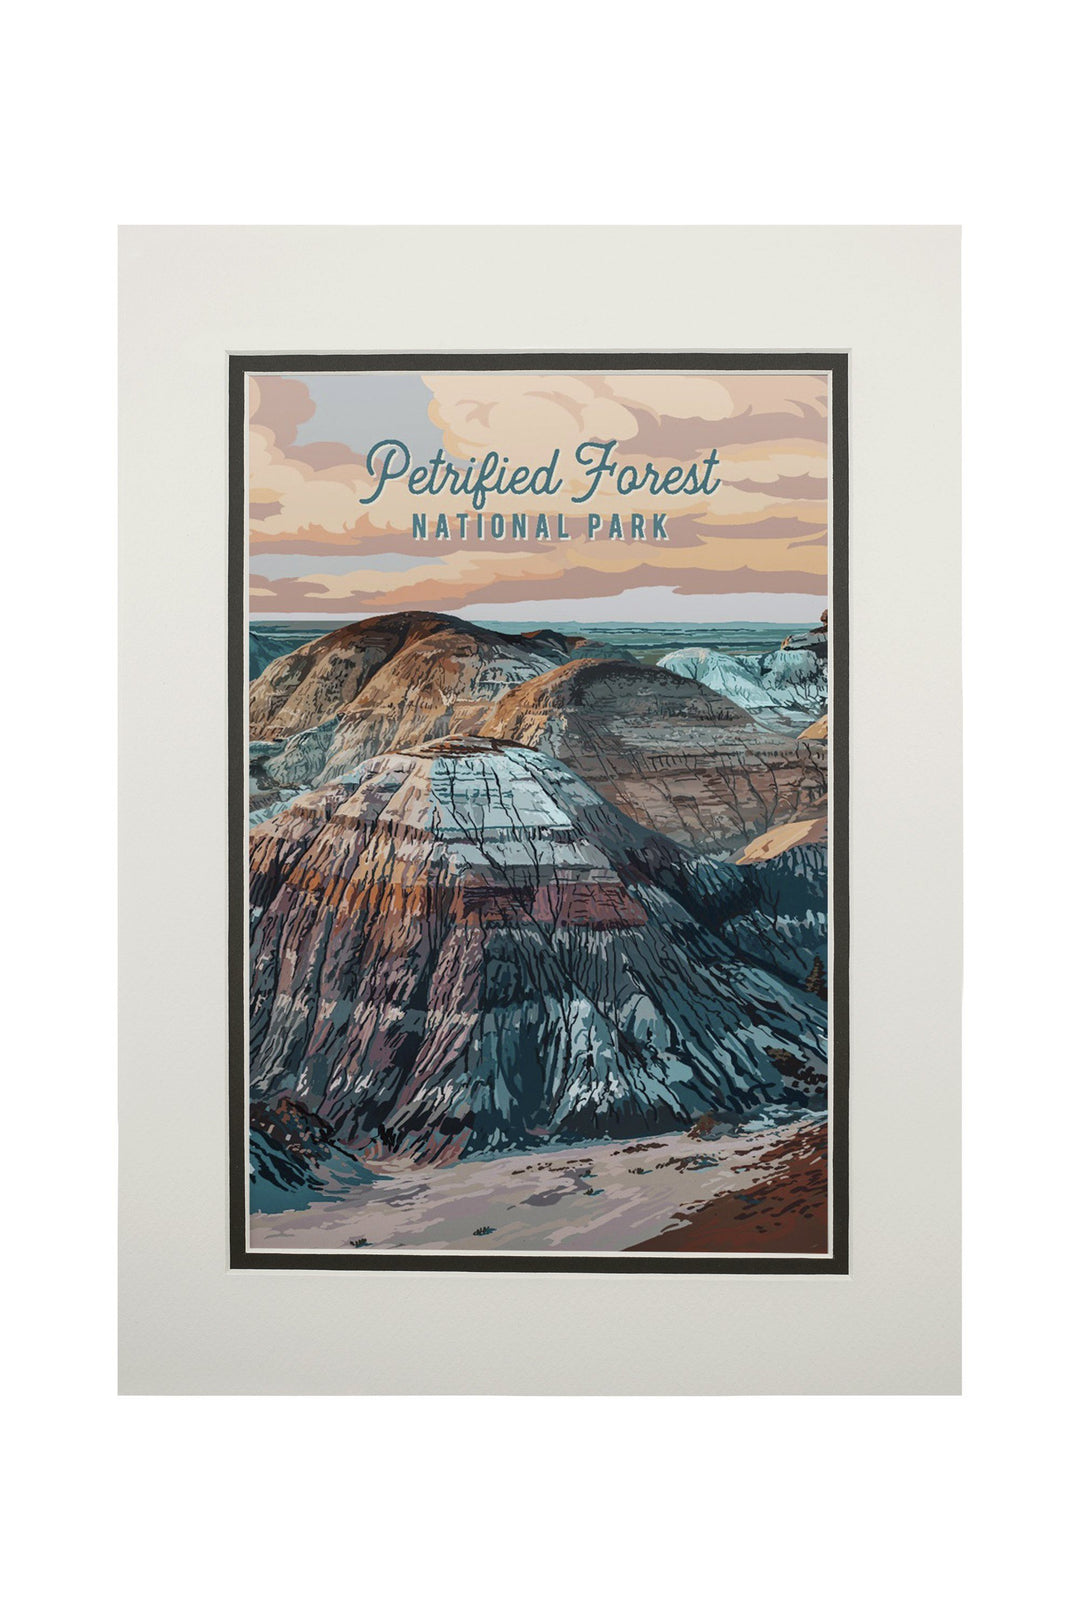 Petrified Forest National Park, Arizona, Painterly National Park Series, Art Prints and Metal Signs Art Lantern Press 11 x 14 Matted Art Print 